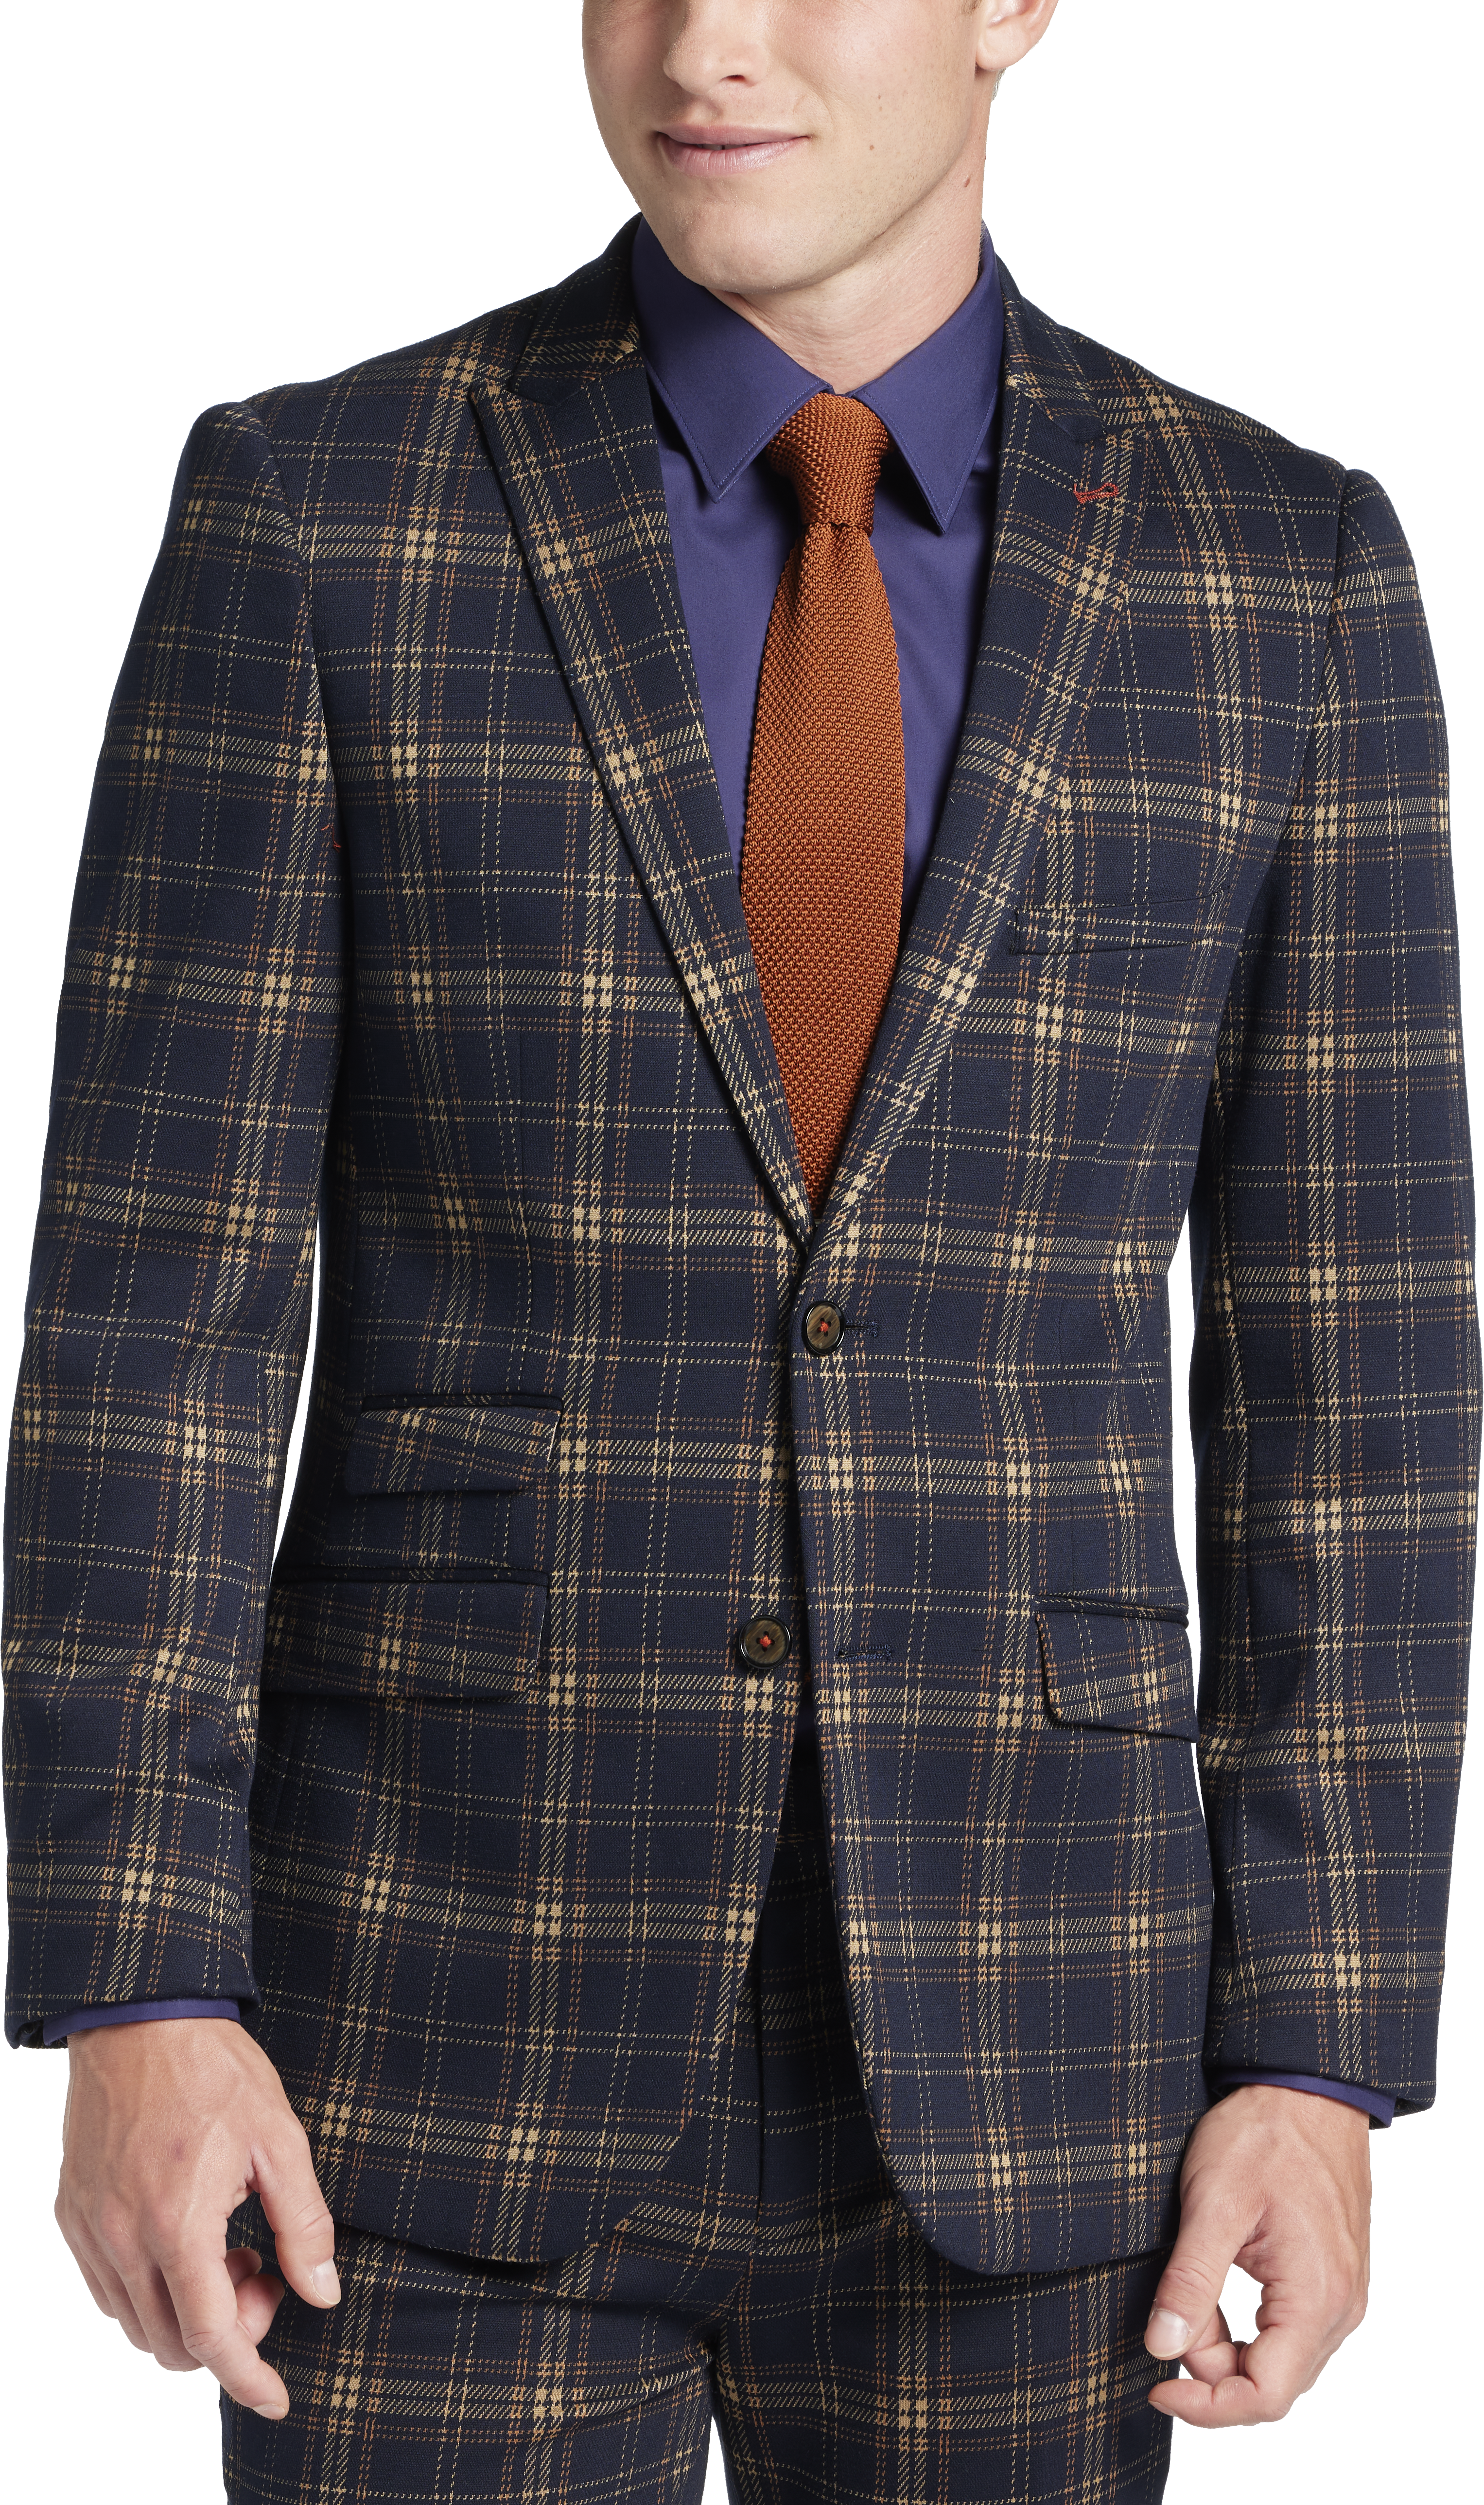 Slim Fit Plaid Peak Lapel Suit Separates Jacket